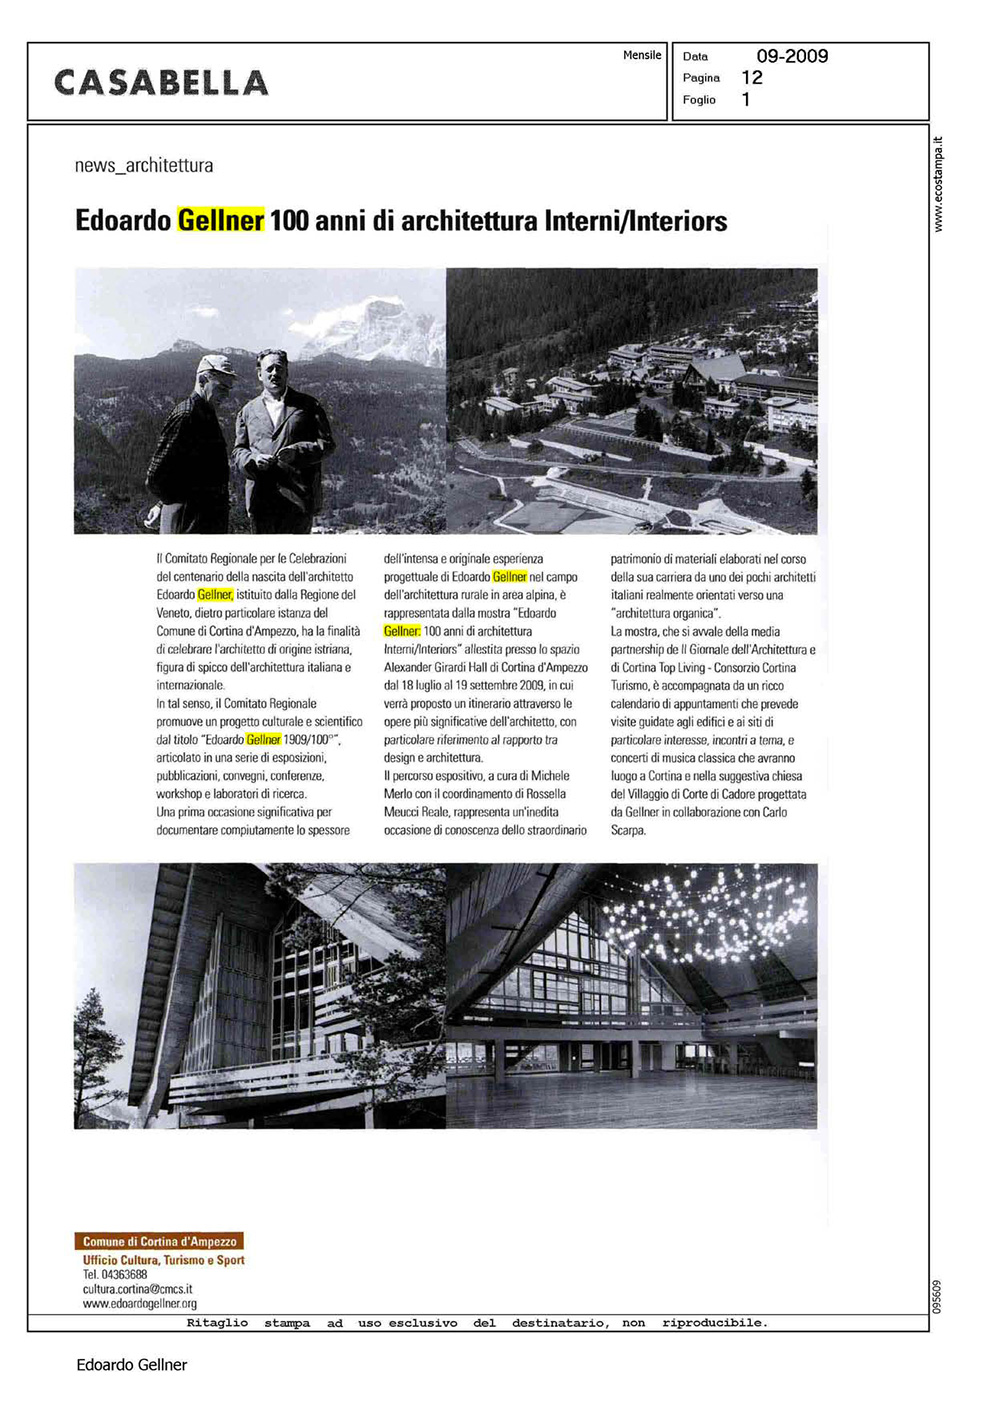 Edoardo Gellner 100 anni di architettura